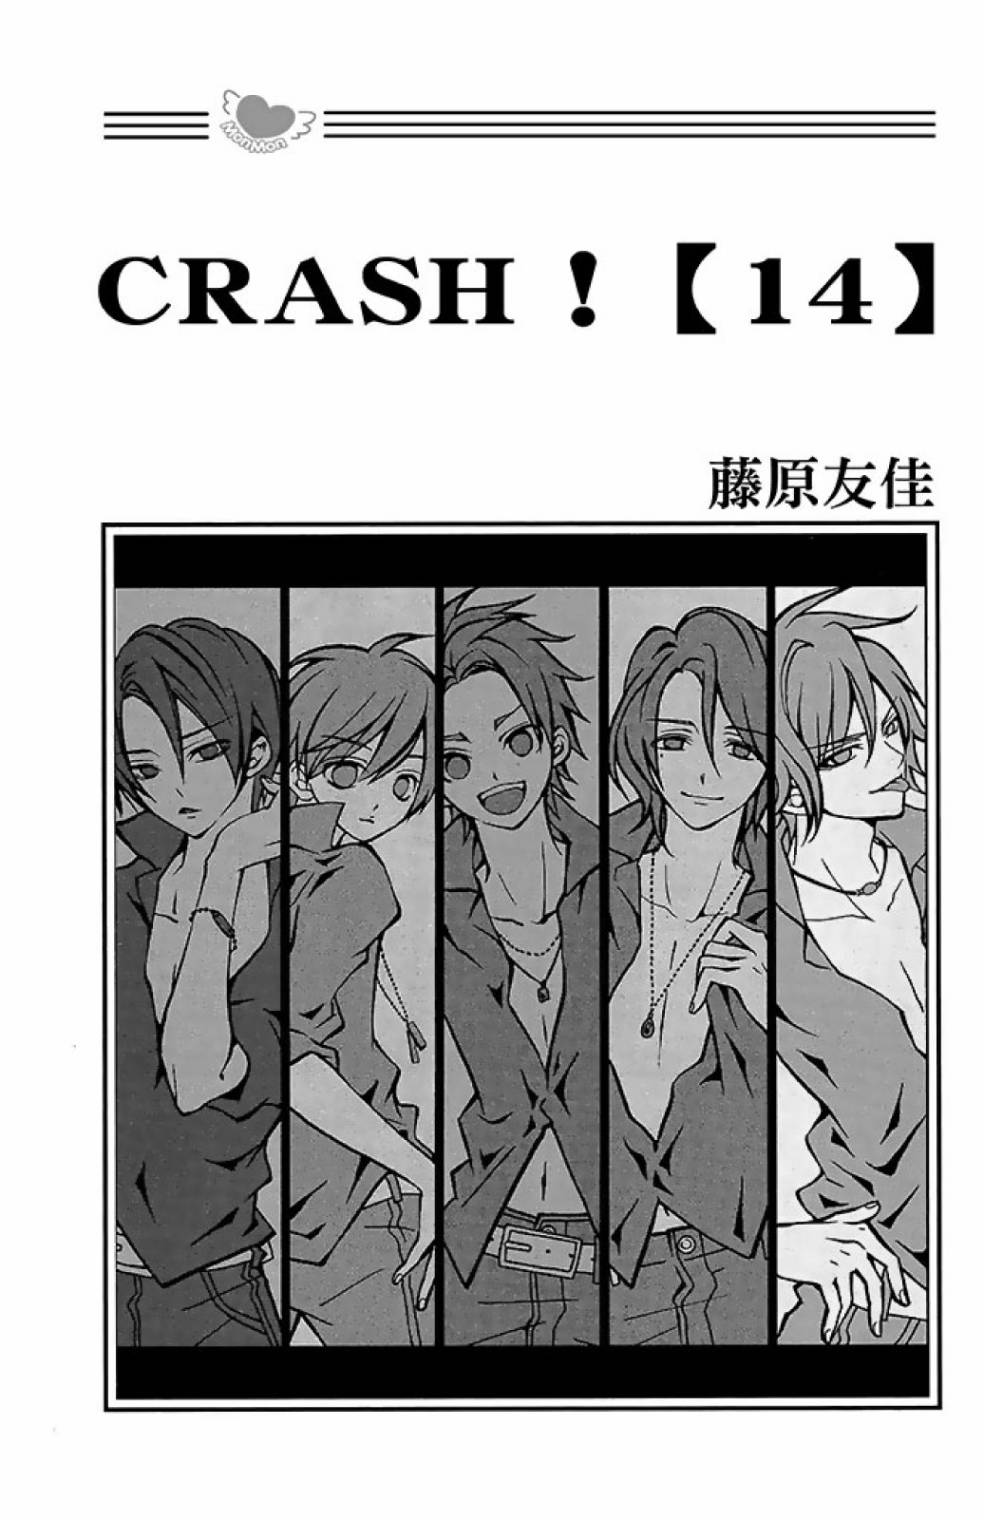 Crash!第二部 - 第14卷(1/4) - 3